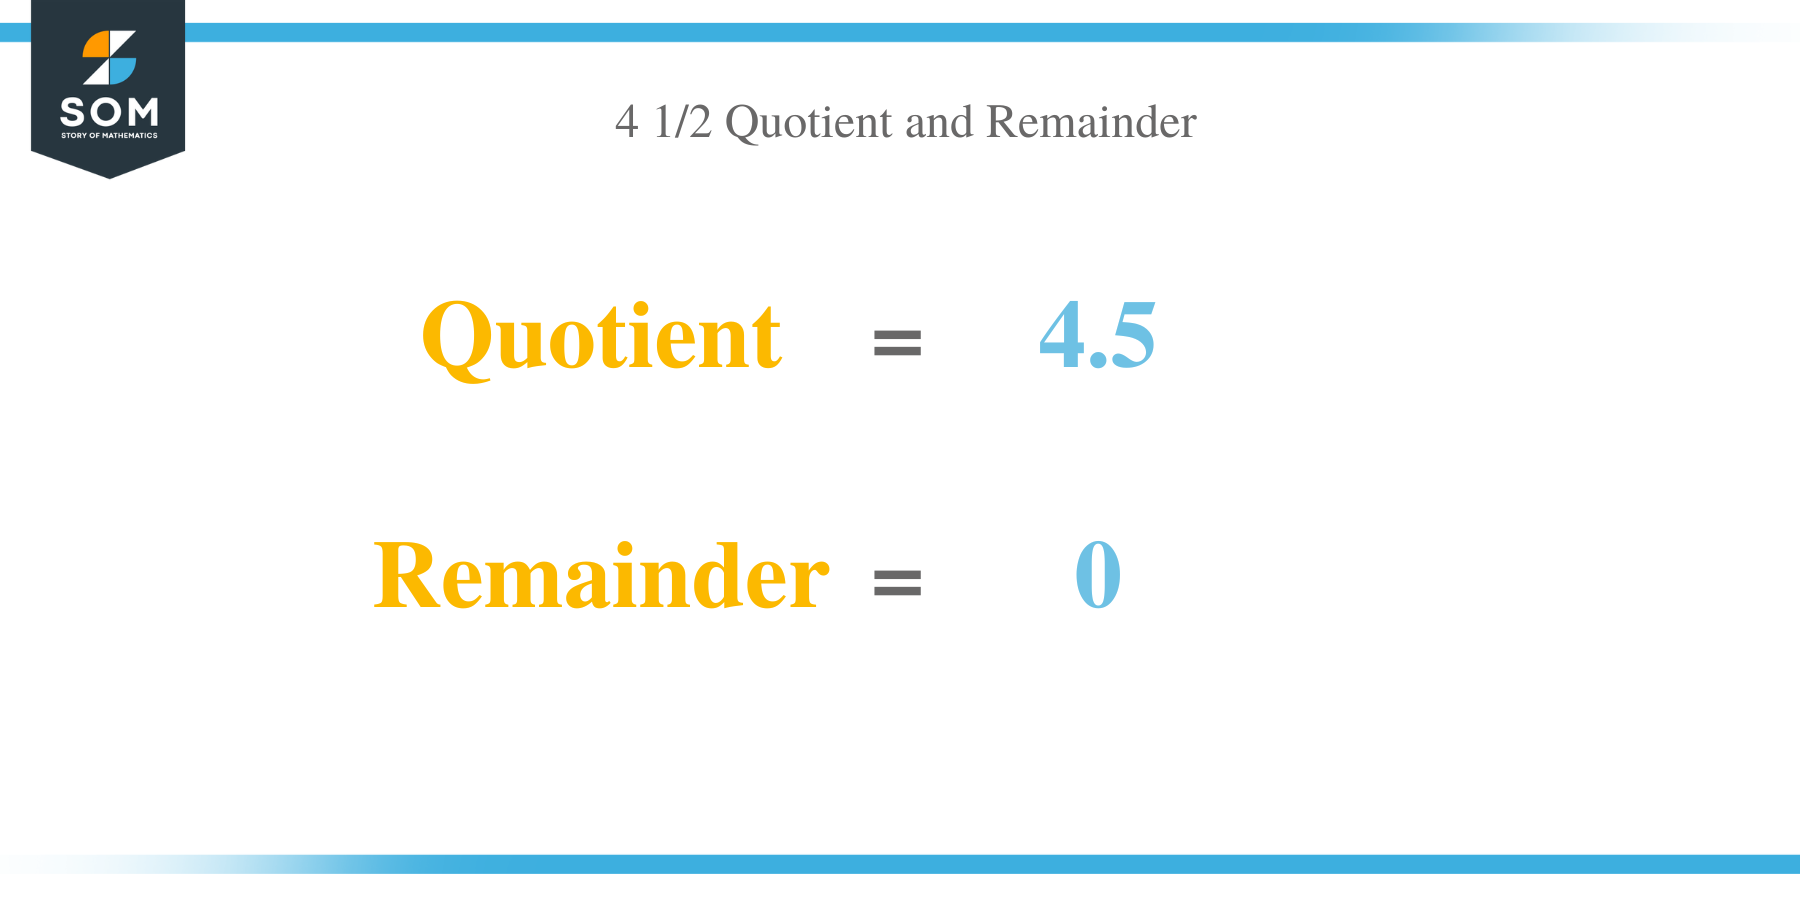 Quotient and remainder of 4 1 per 2